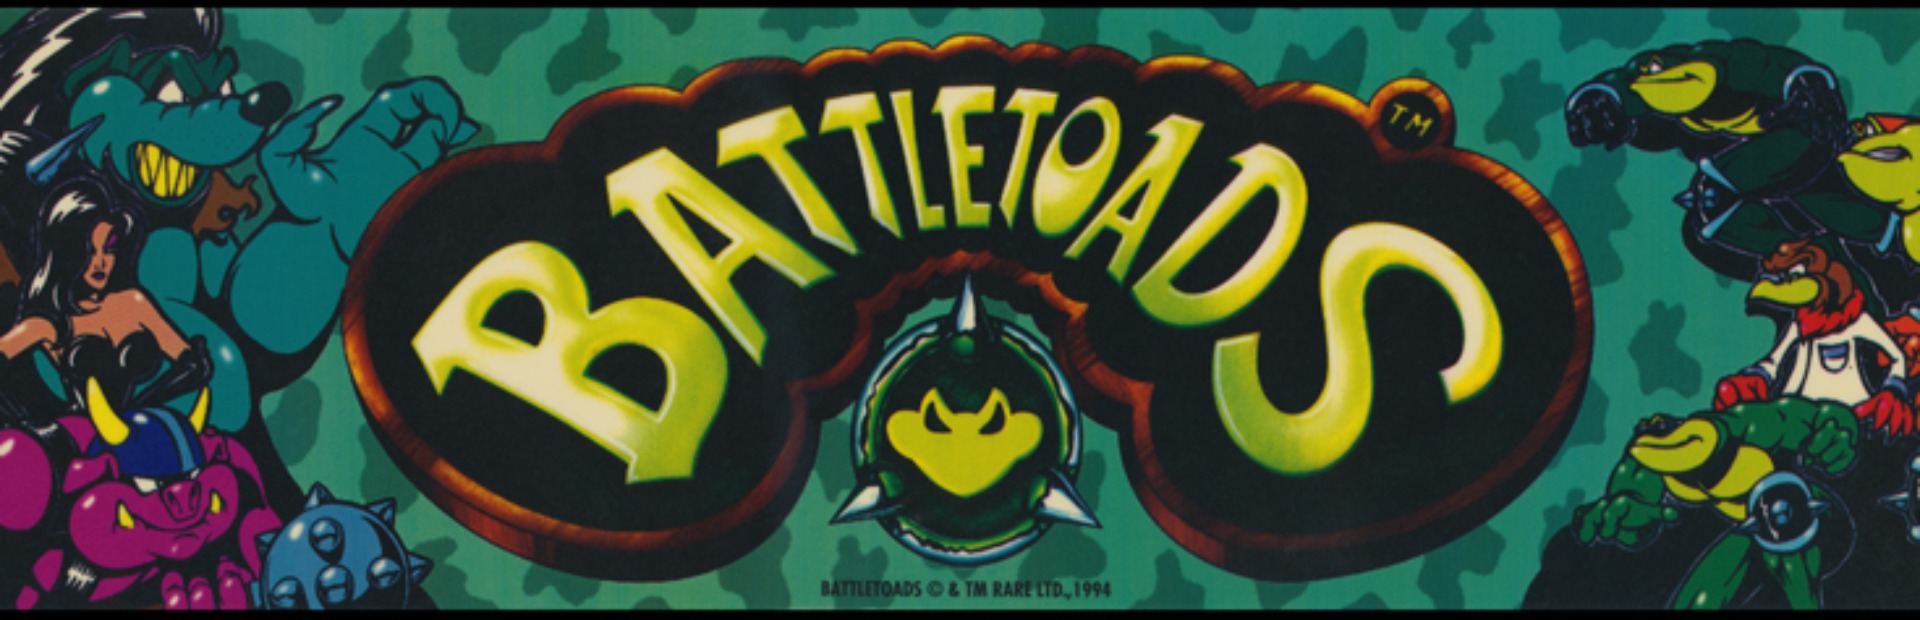 Battletoads пародия на. Батлтоадс Раш. Battletoads Arcade. Игровой автомат Battletoads.